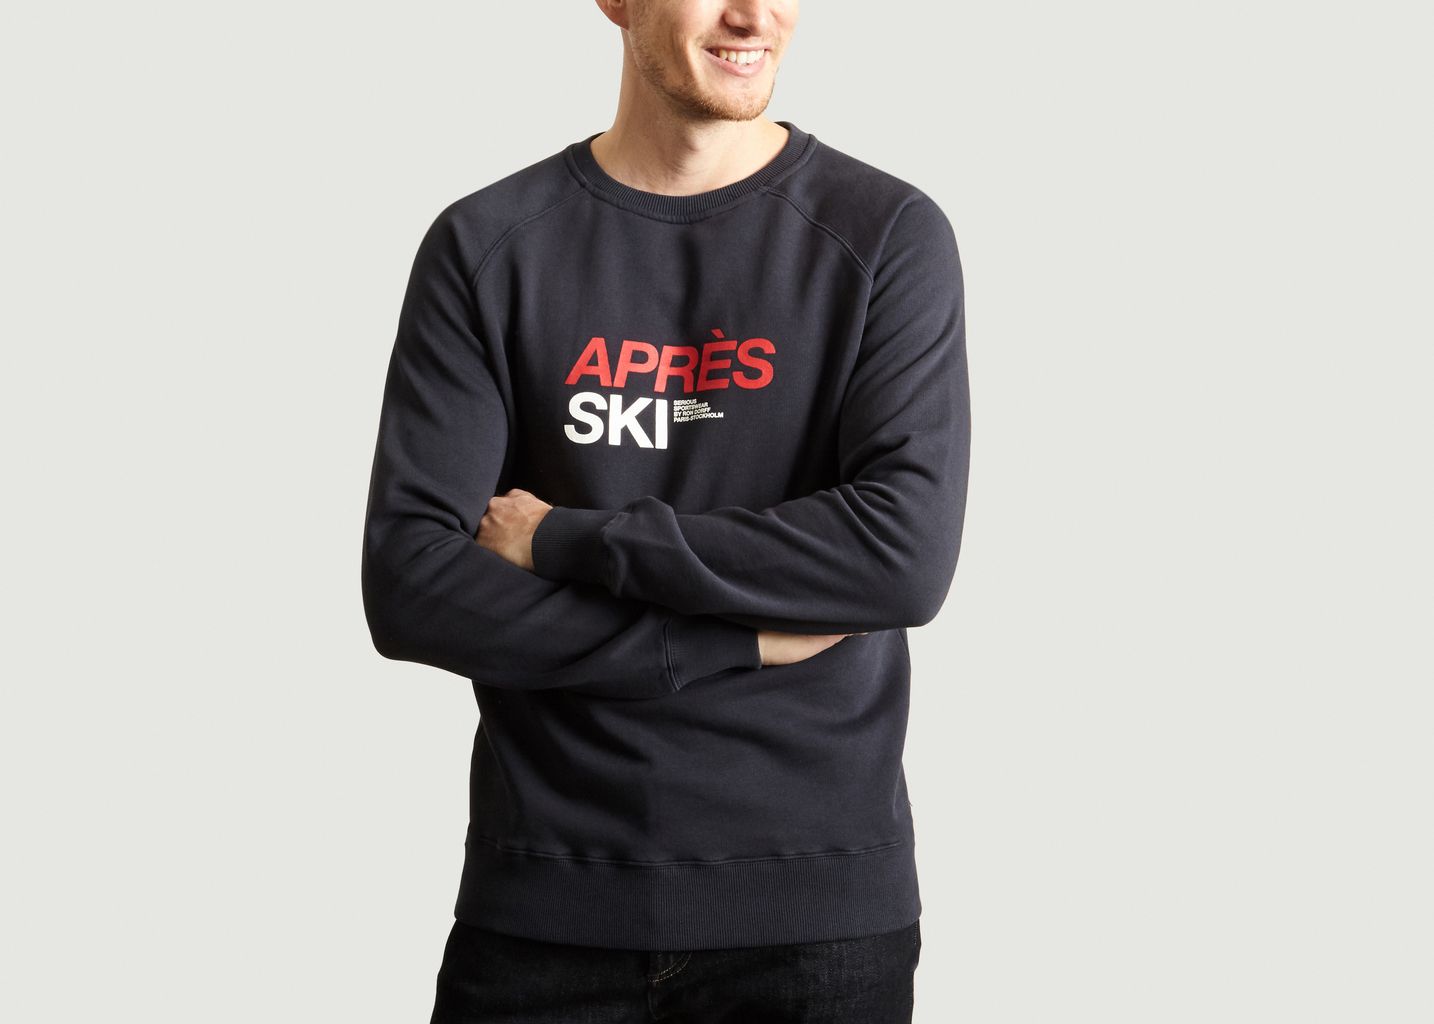 Sweatshirt Après Ski - Ron Dorff